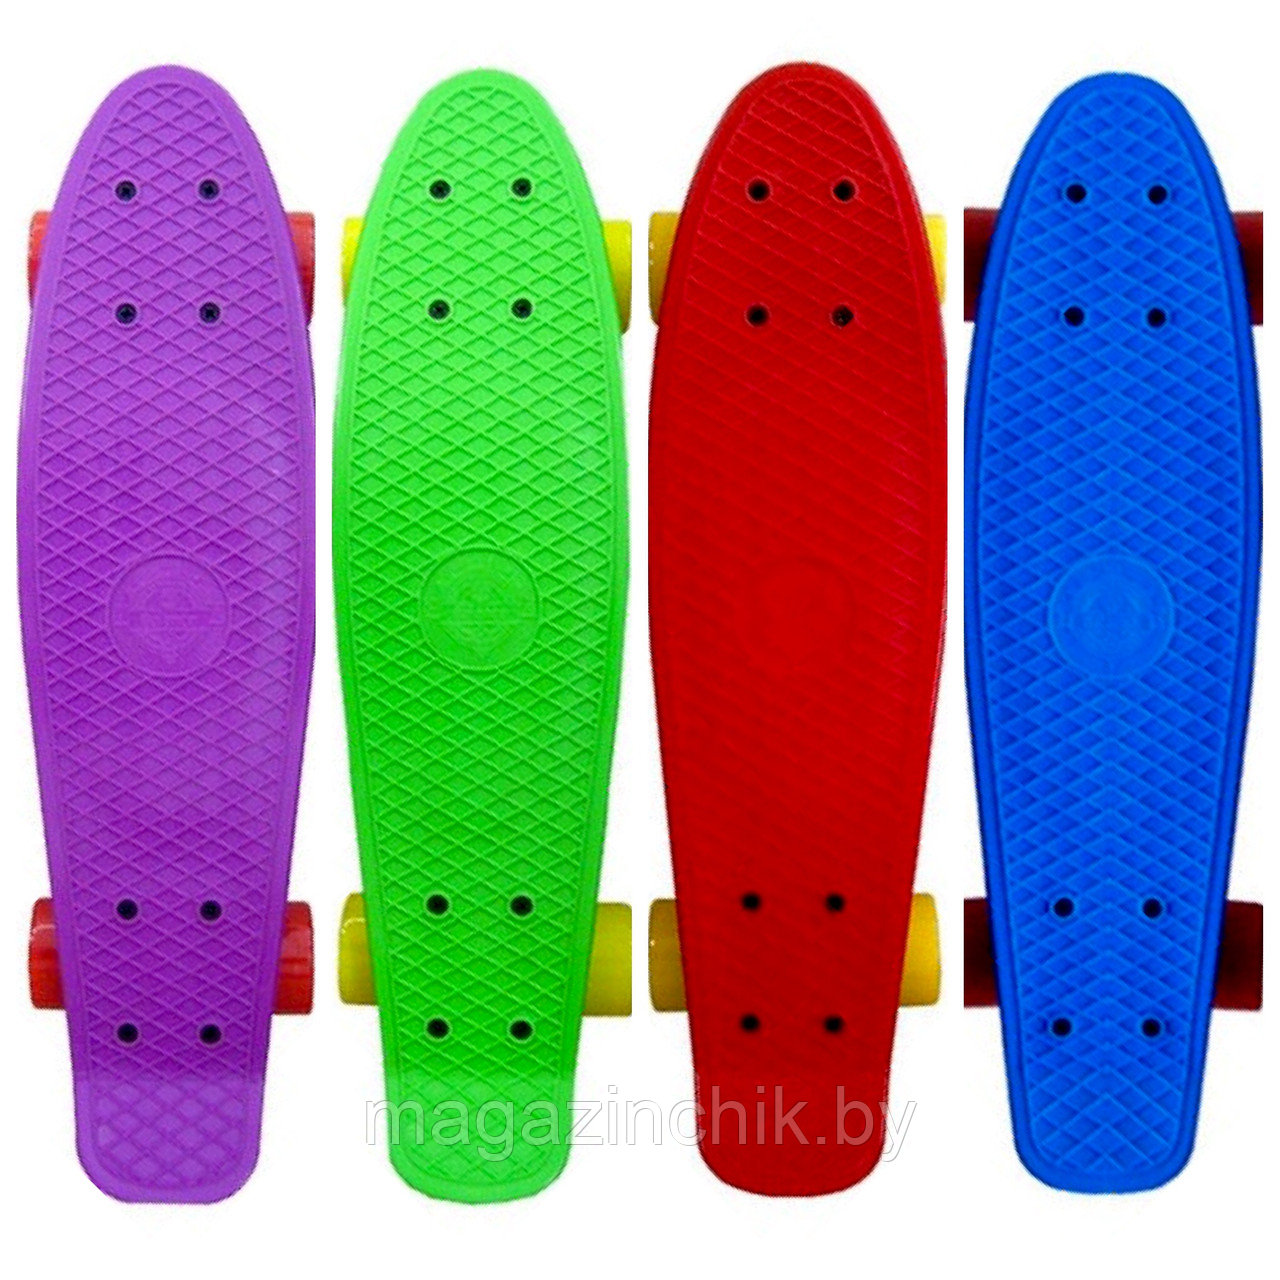 Пенниборд мини (Penny Board) 40 см - роликовая доска, скейт